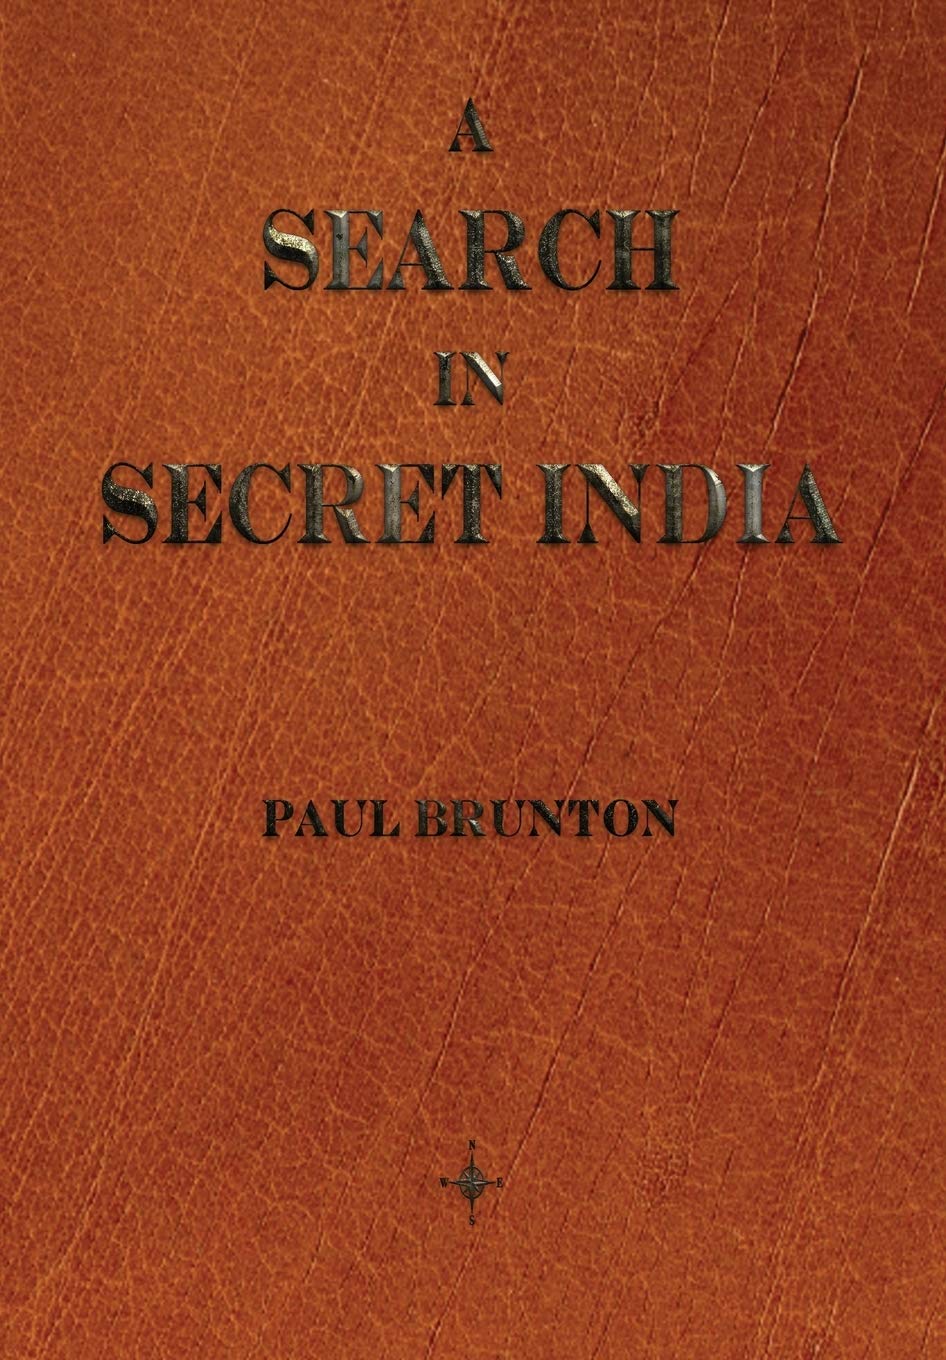 A SEARCH IN SECRET INDIA 